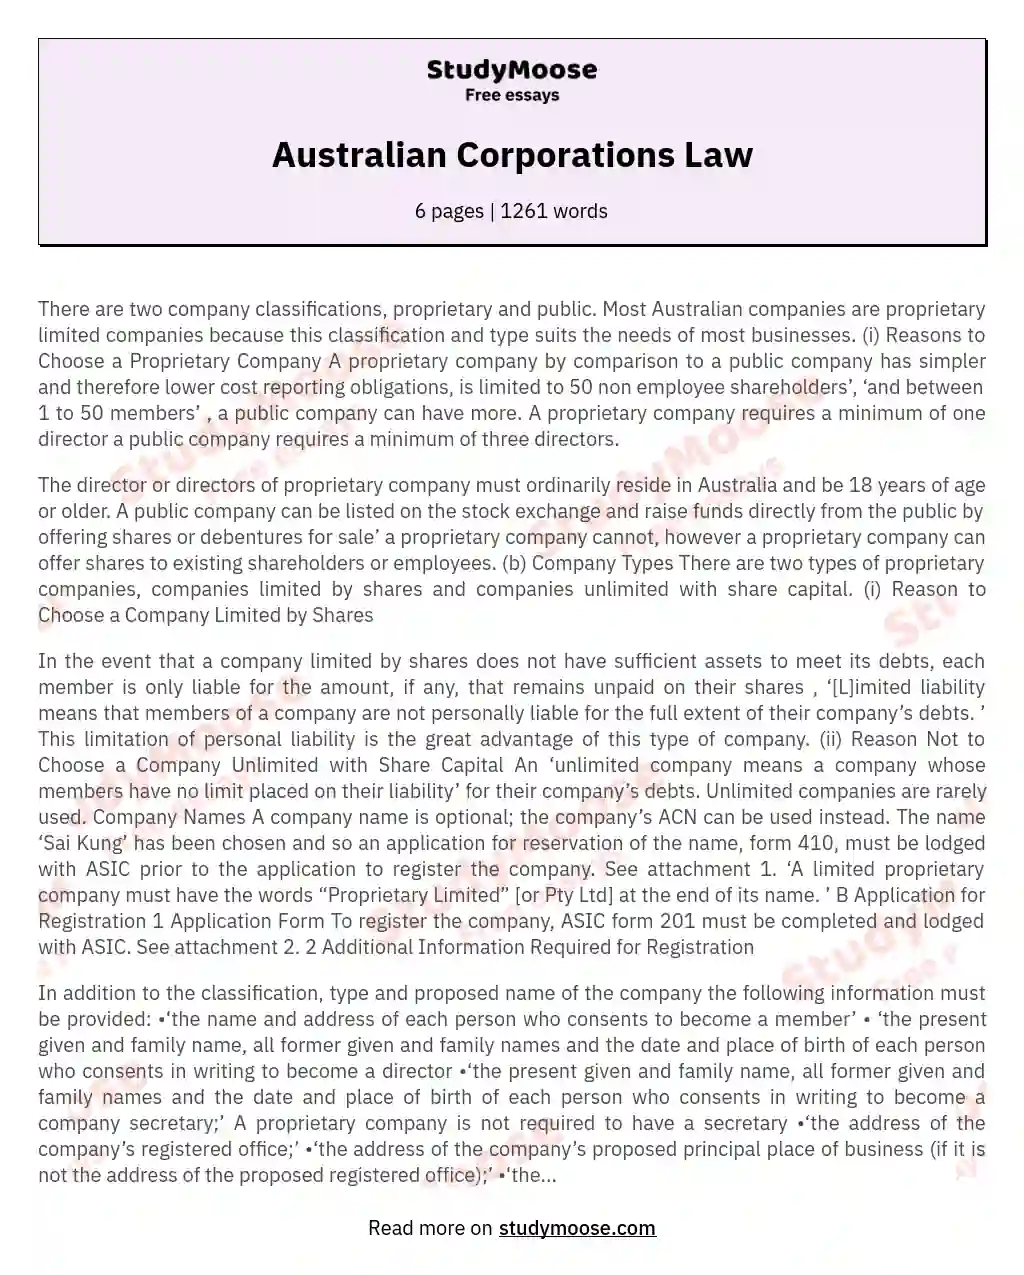 Australian Corporations Law essay